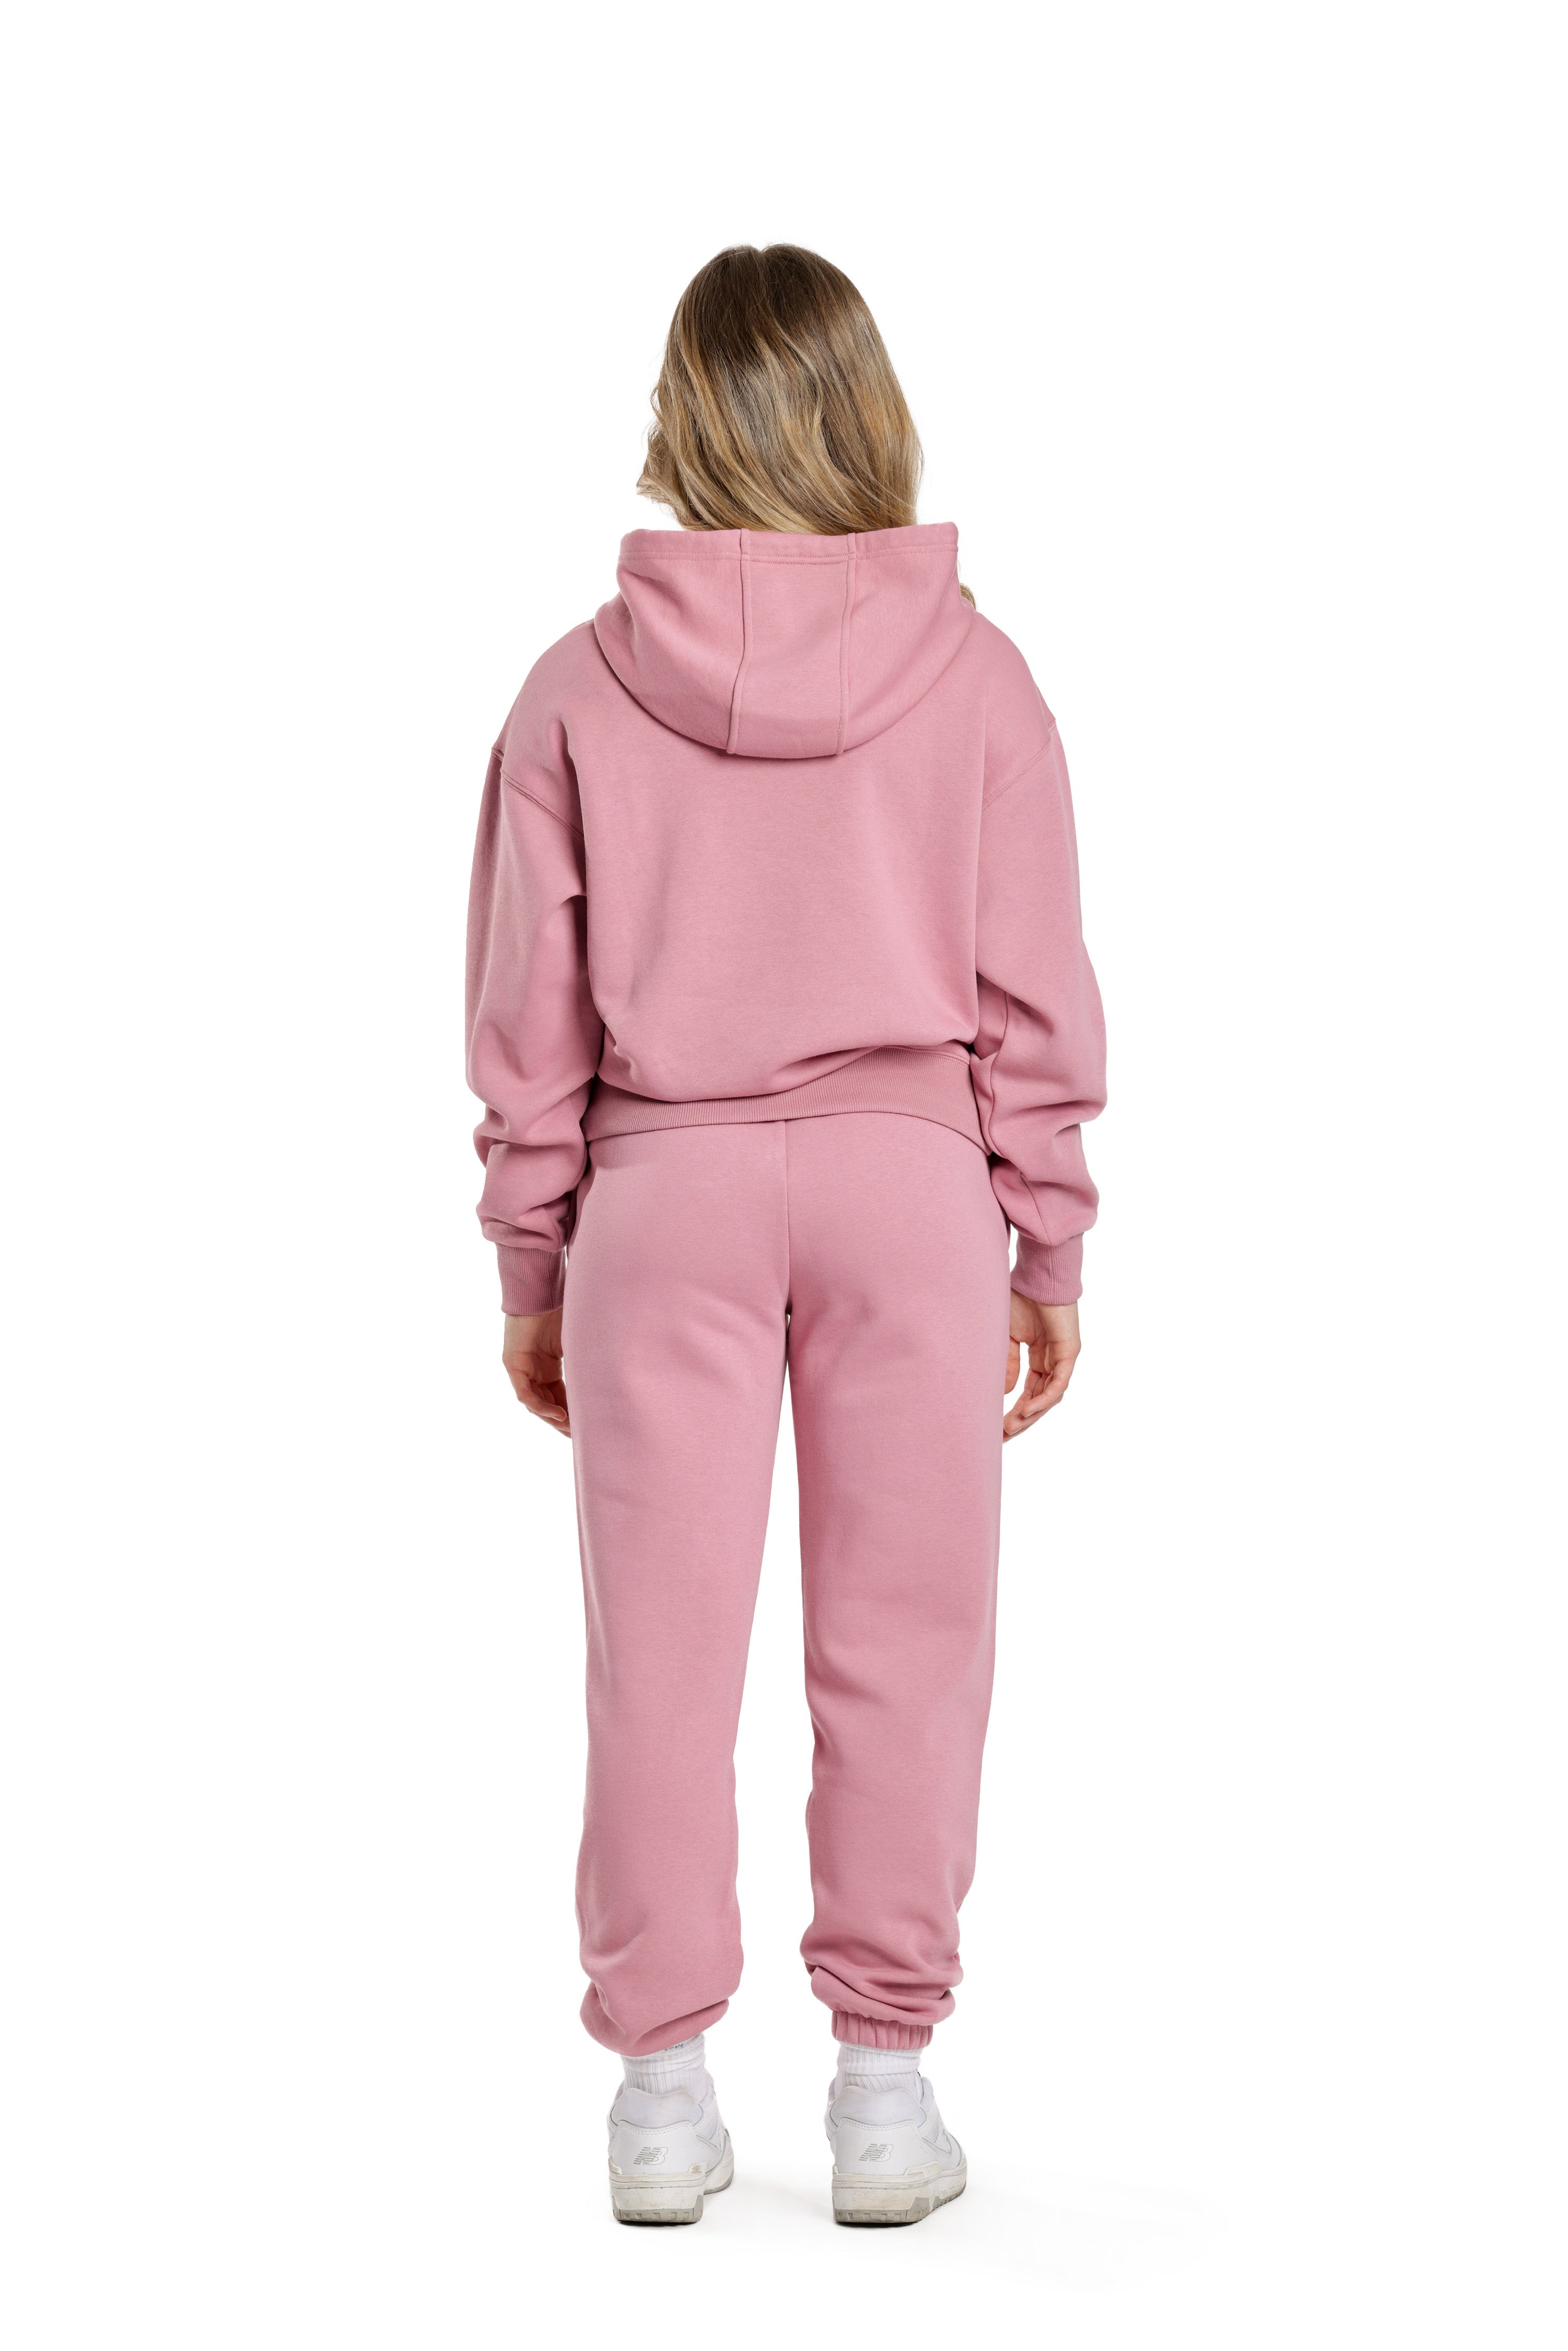 Womens Sweatsuits  Lazypants Premium Fleece Relaxed Sweatsuit Set